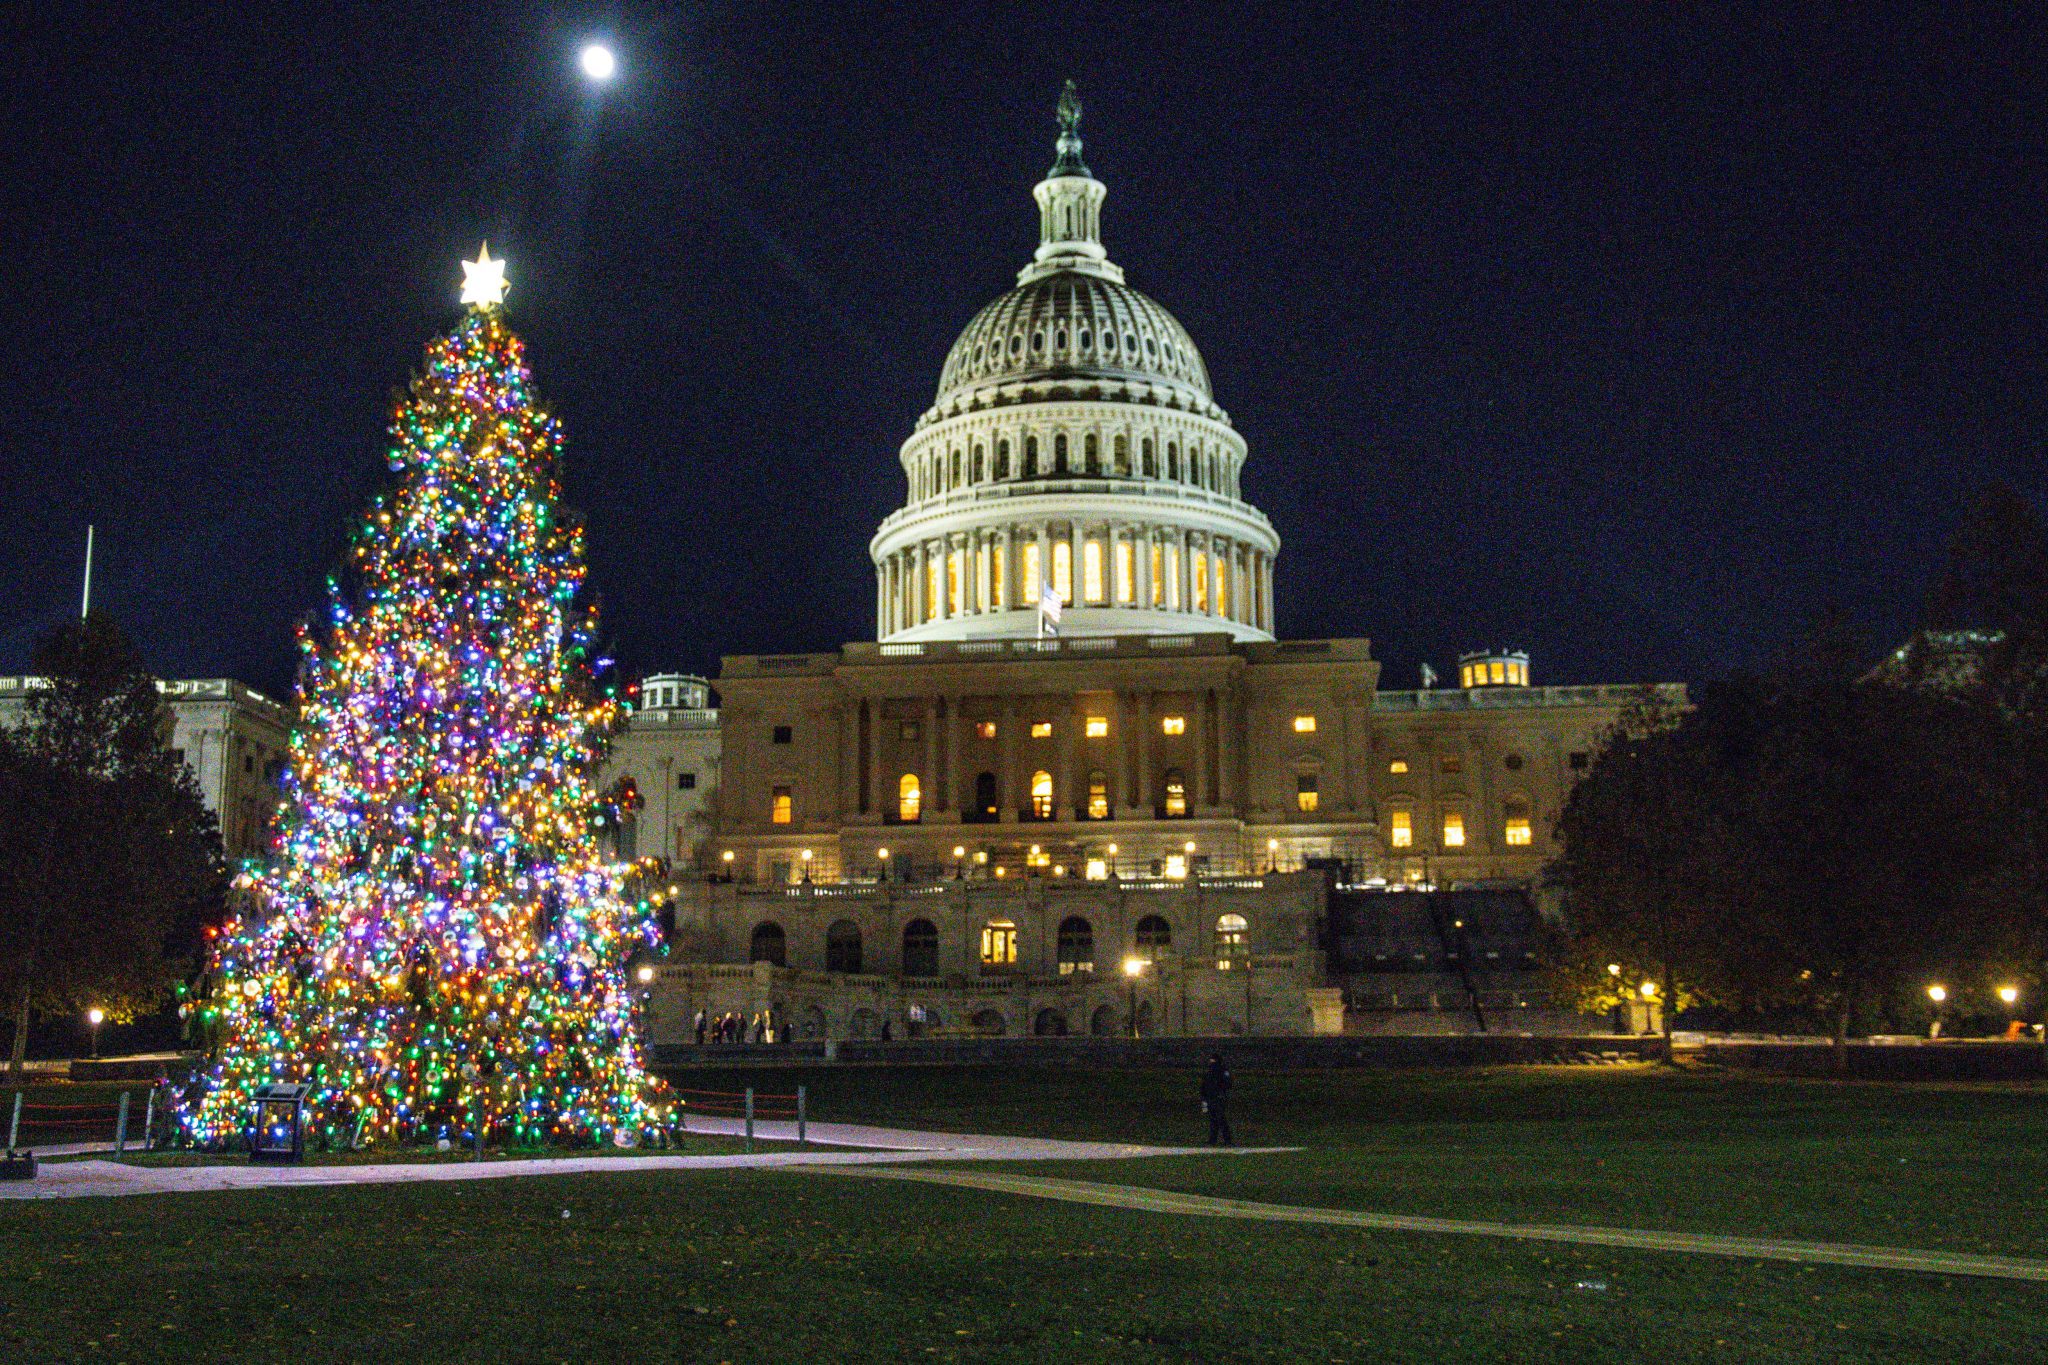 The U.S. Capitol Christmas Tree